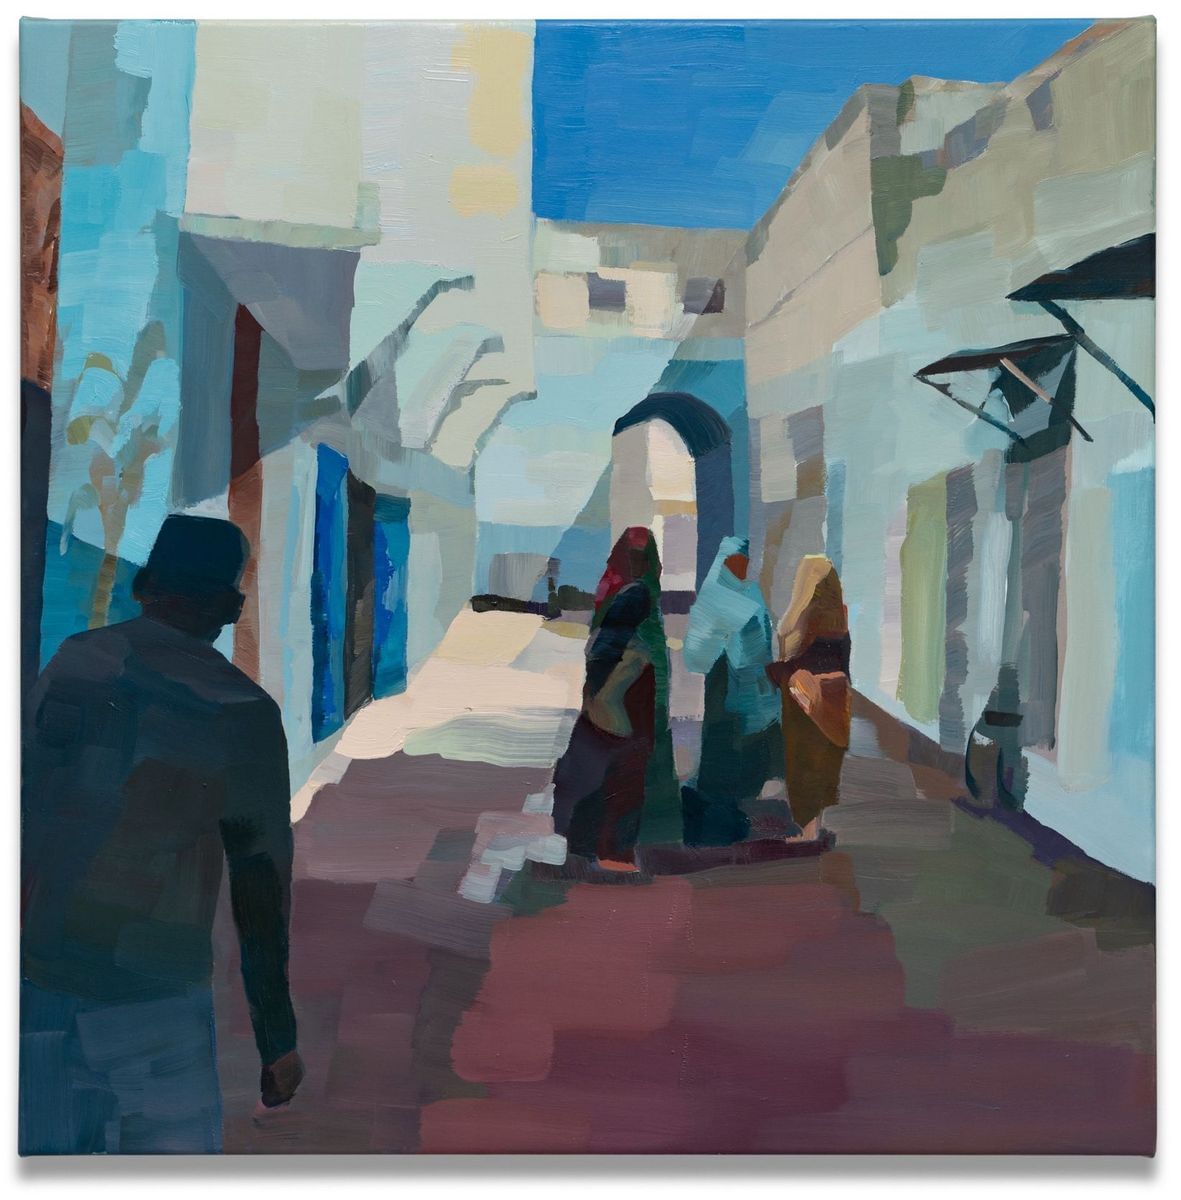 Lyndal Hargrave - Medina Of Fes, Morocco